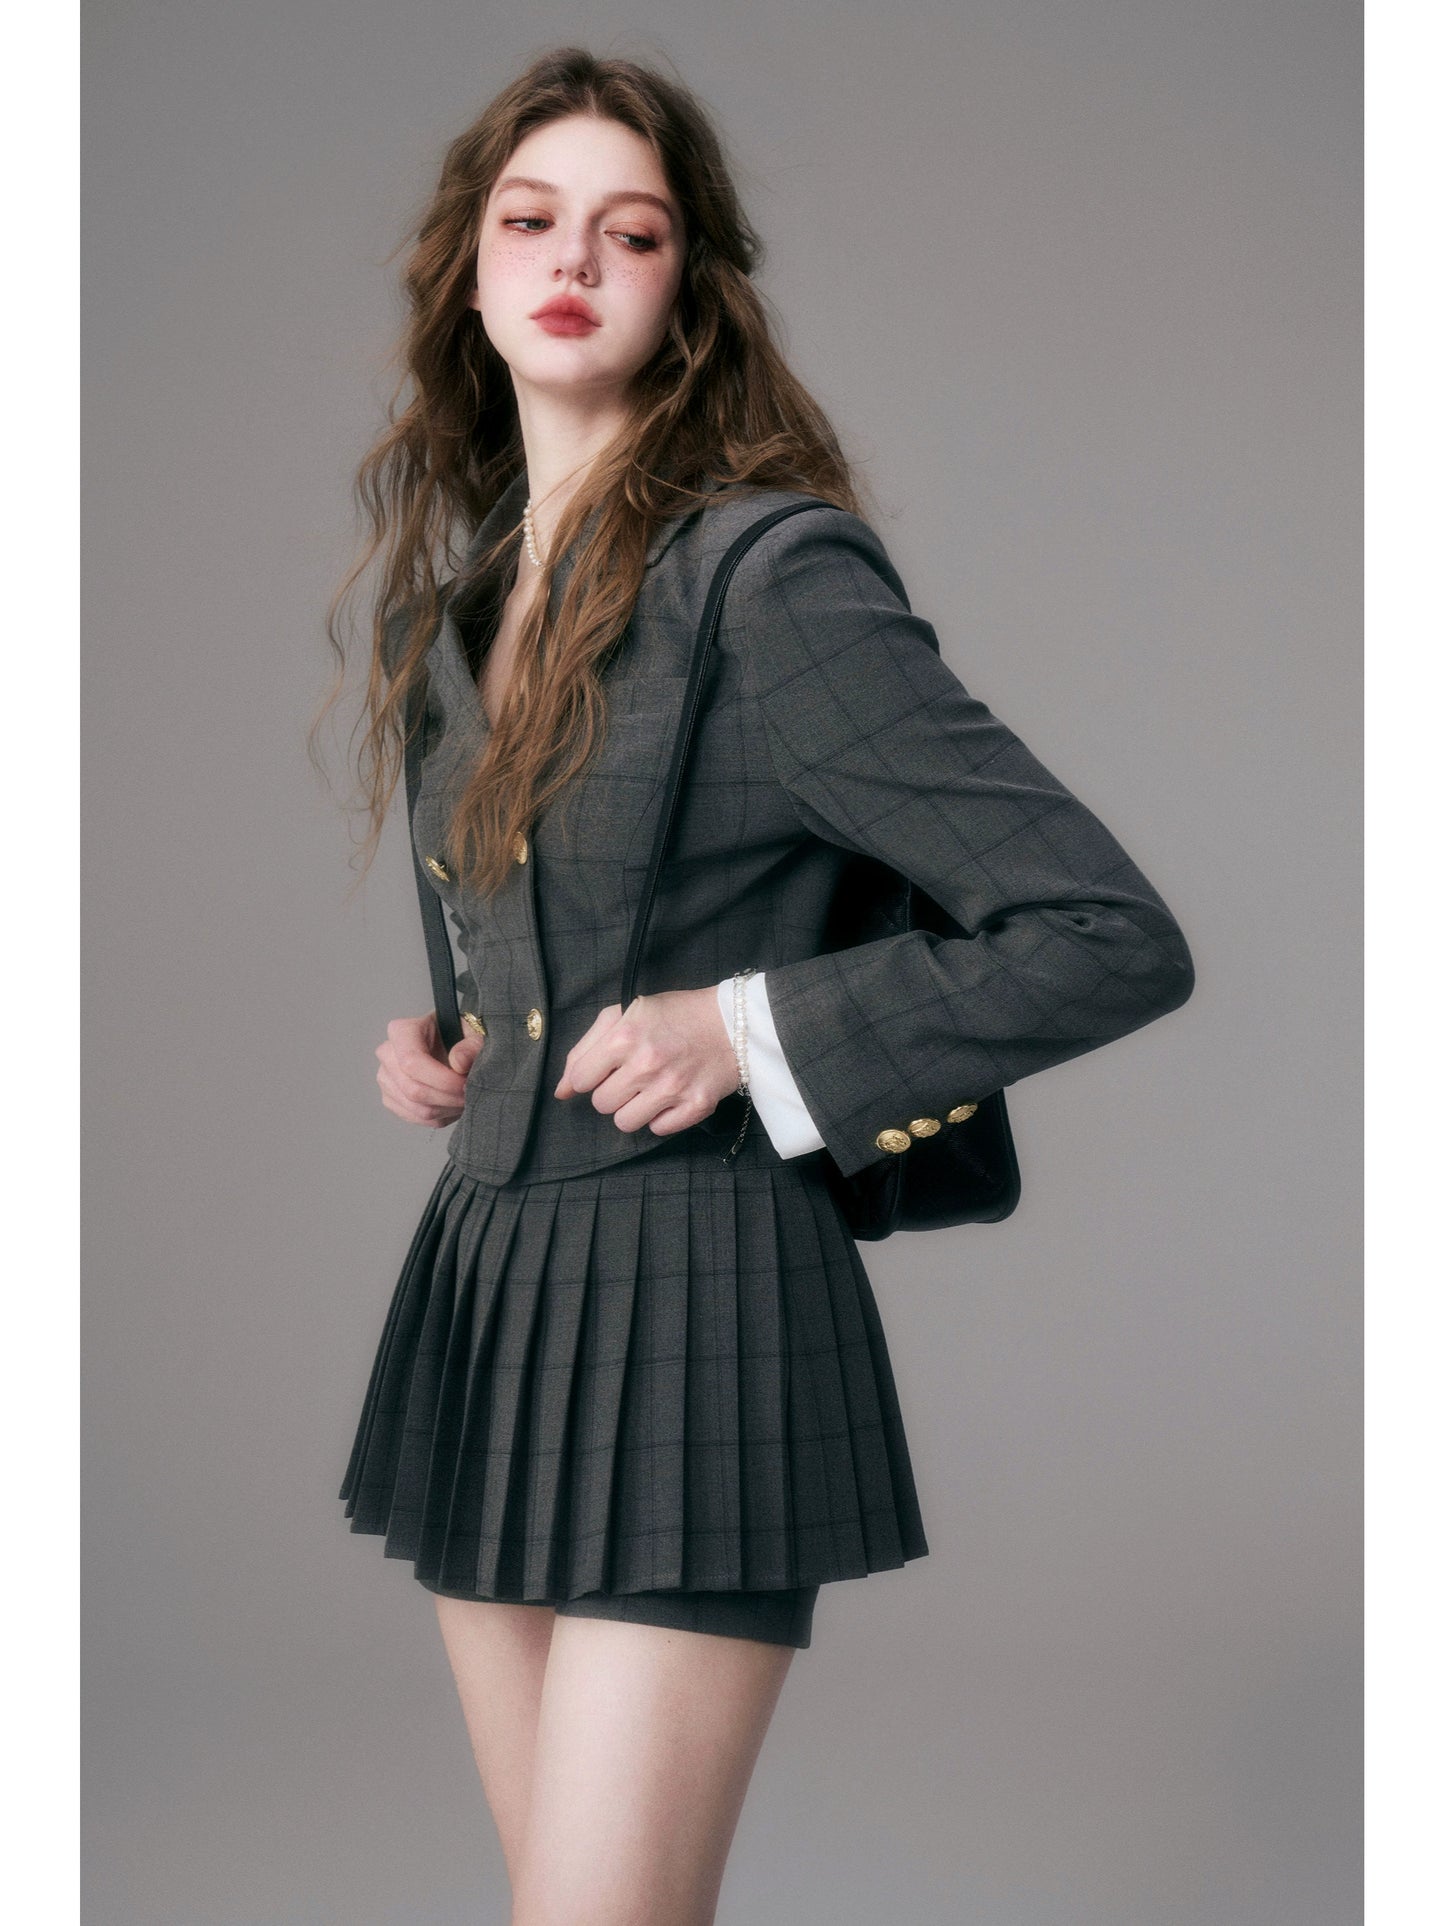 Gryffindor Pleated Skirt Set - English Academy Style